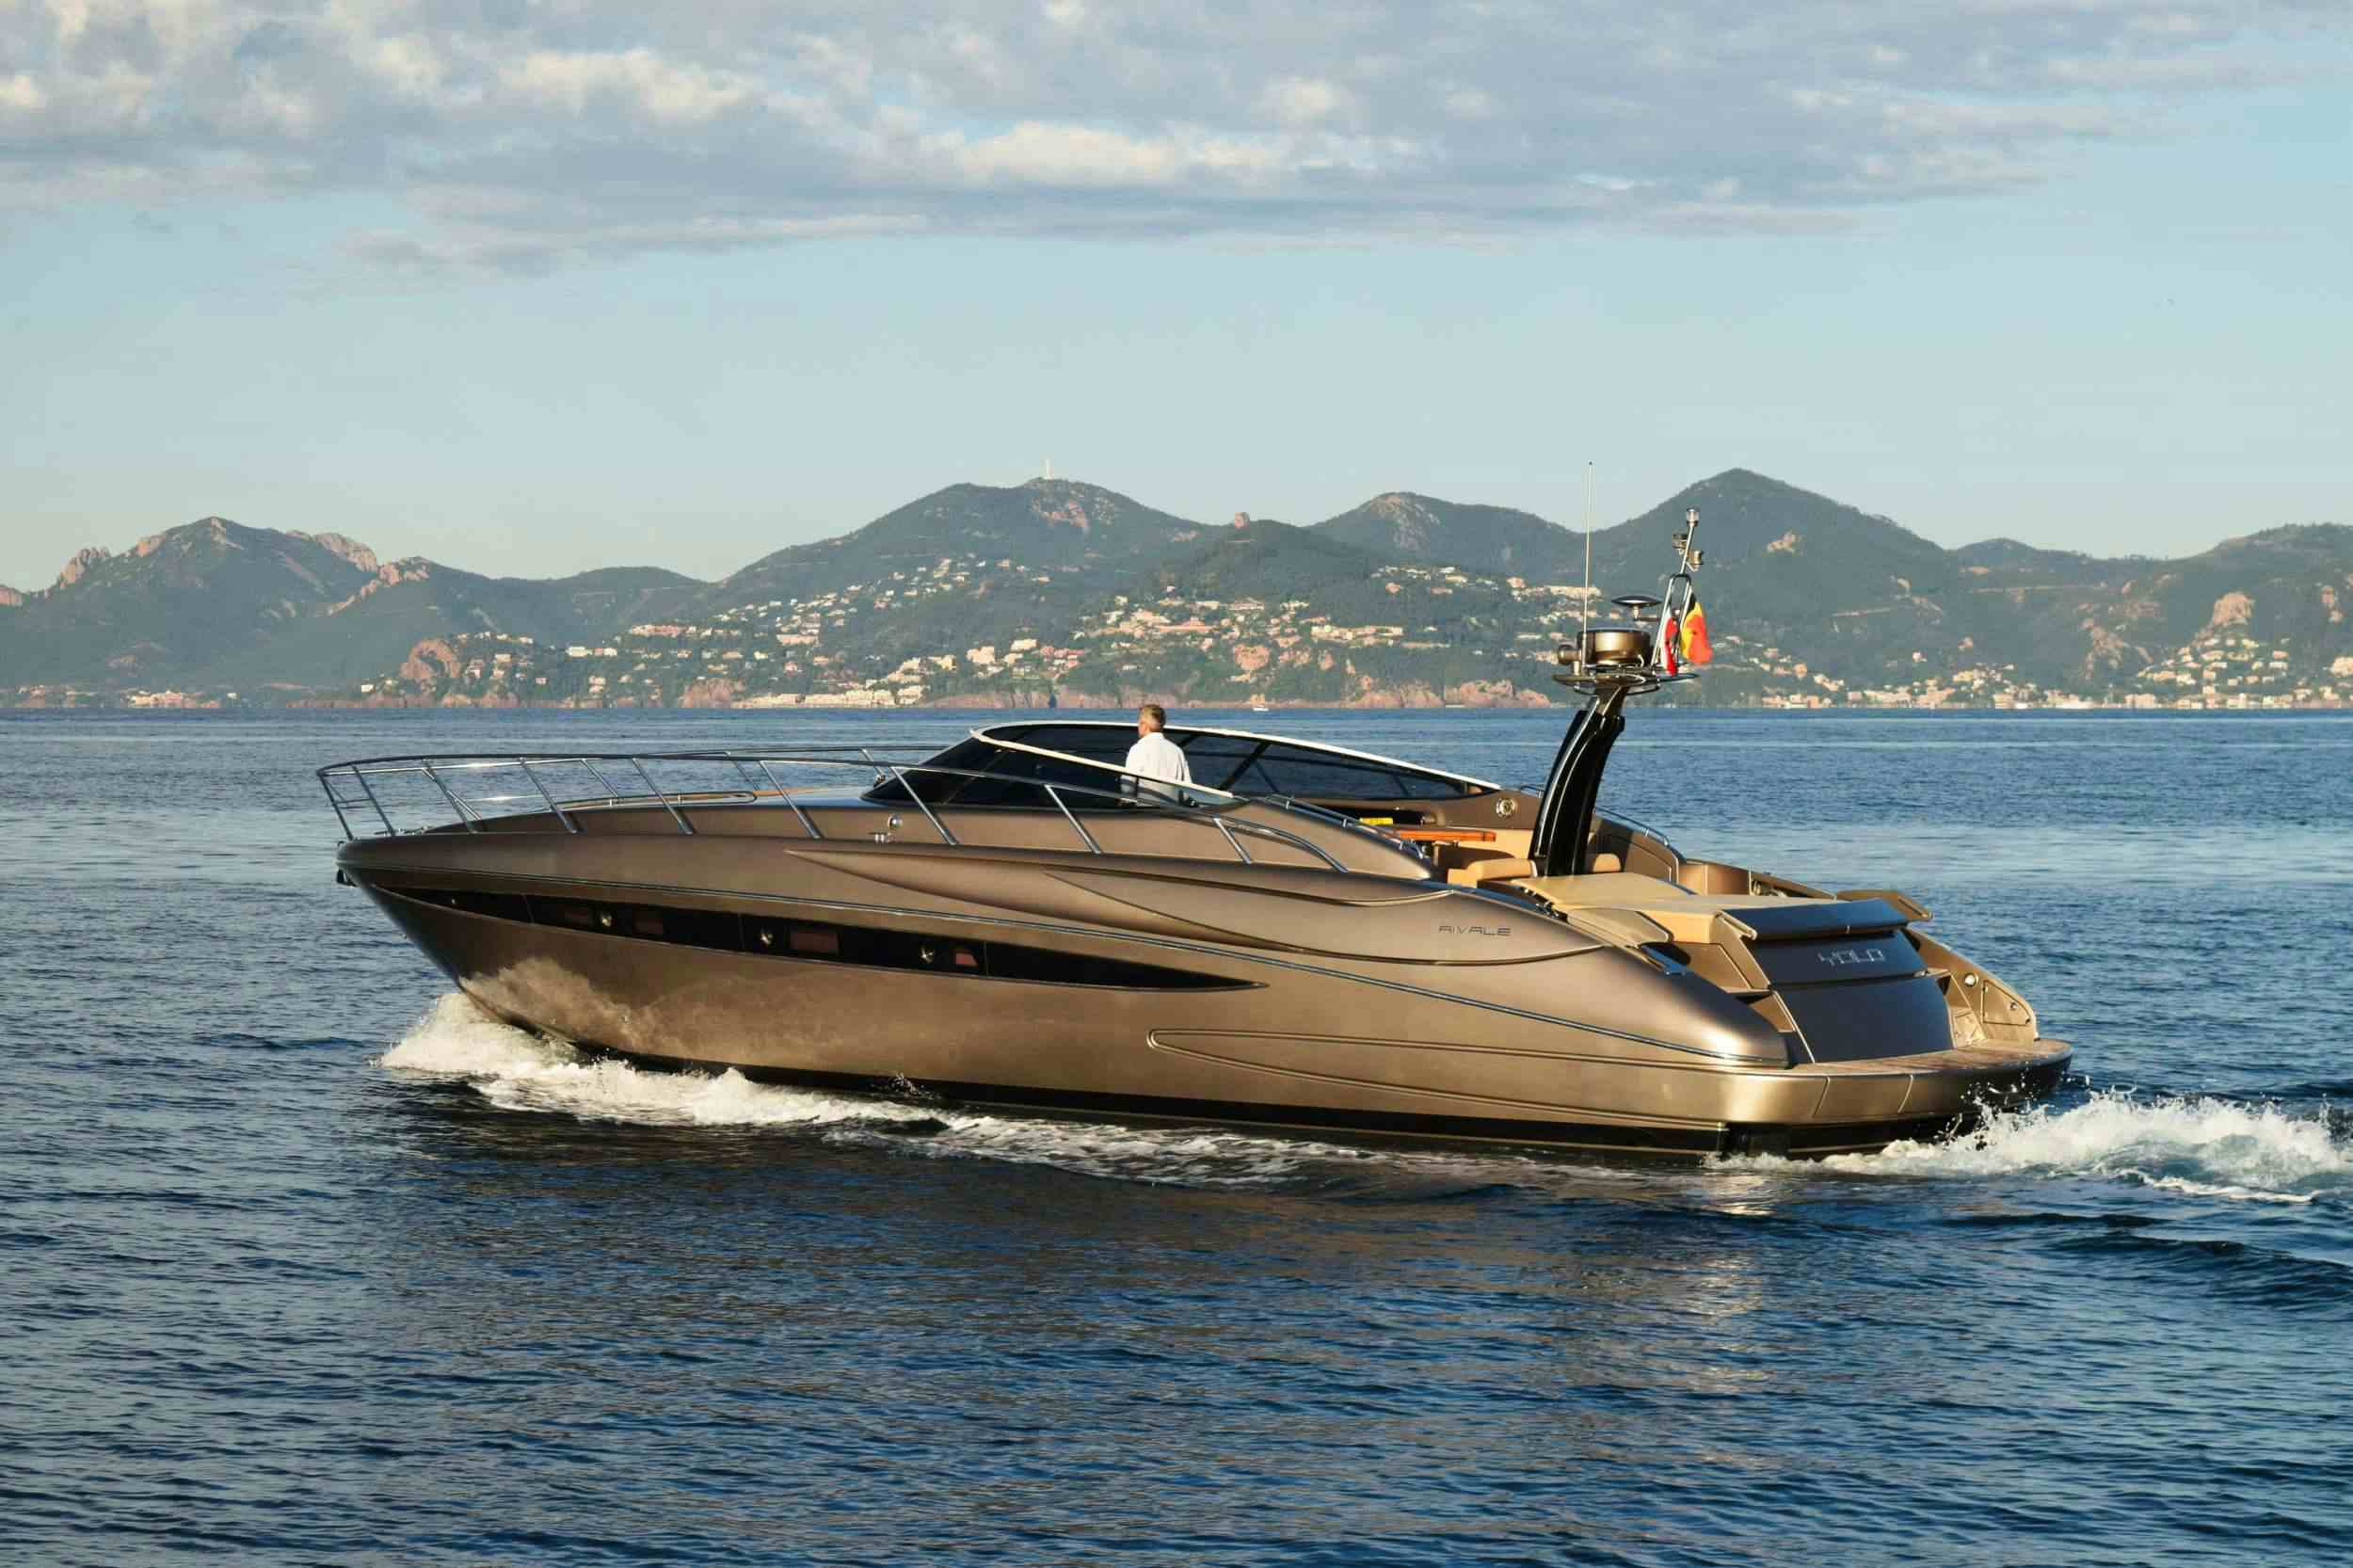 Yolo - Yacht Charter Monaco & Boat hire in Fr. Riviera, Corsica & Sardinia 1